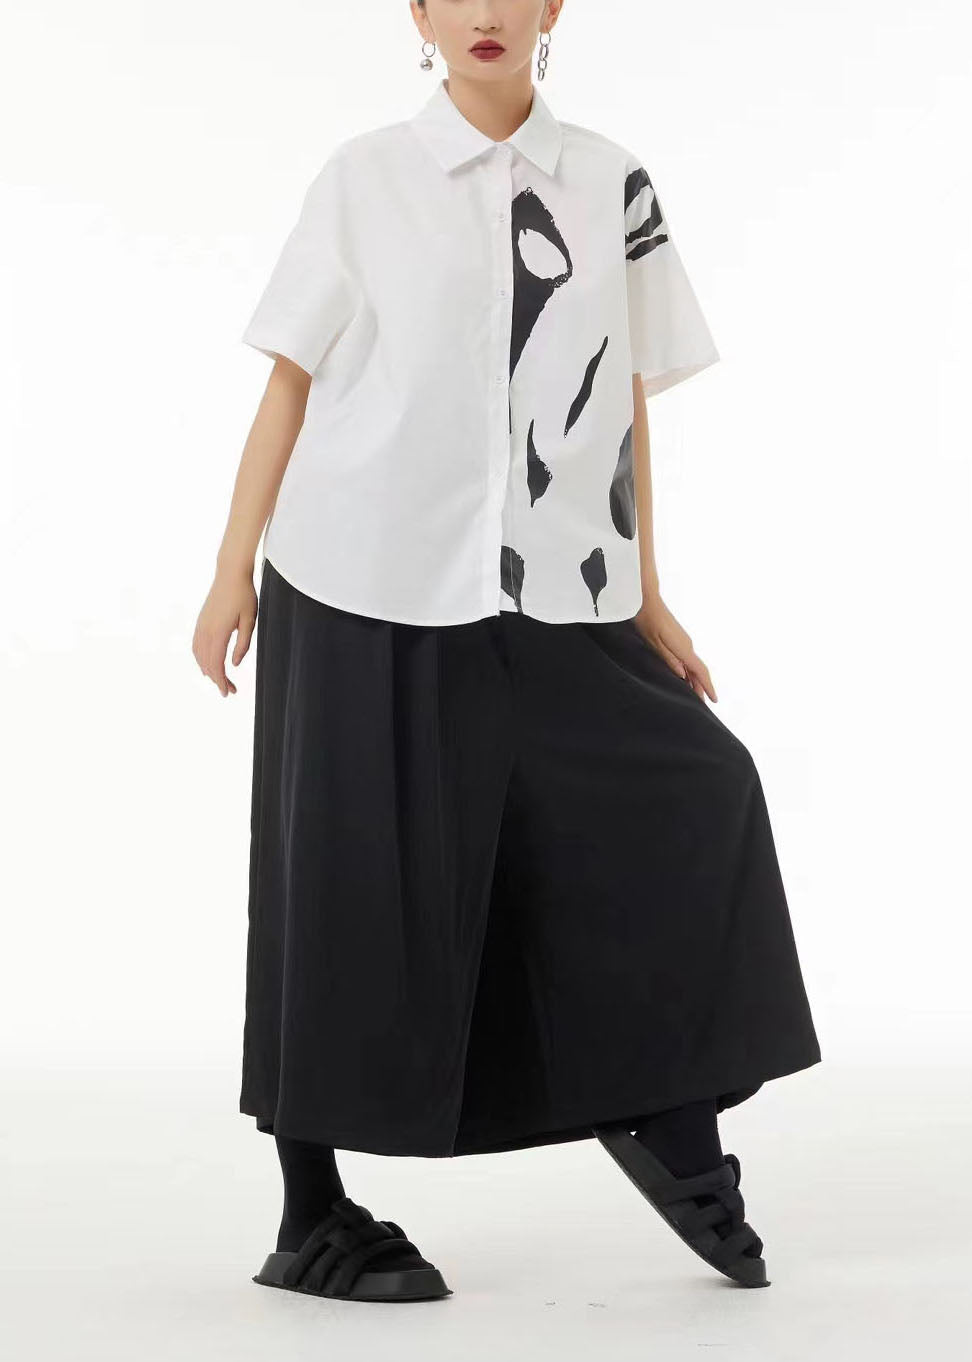 Art White Original Design Print Cotton Shirt Tops Summer LC0114 - fabuloryshop